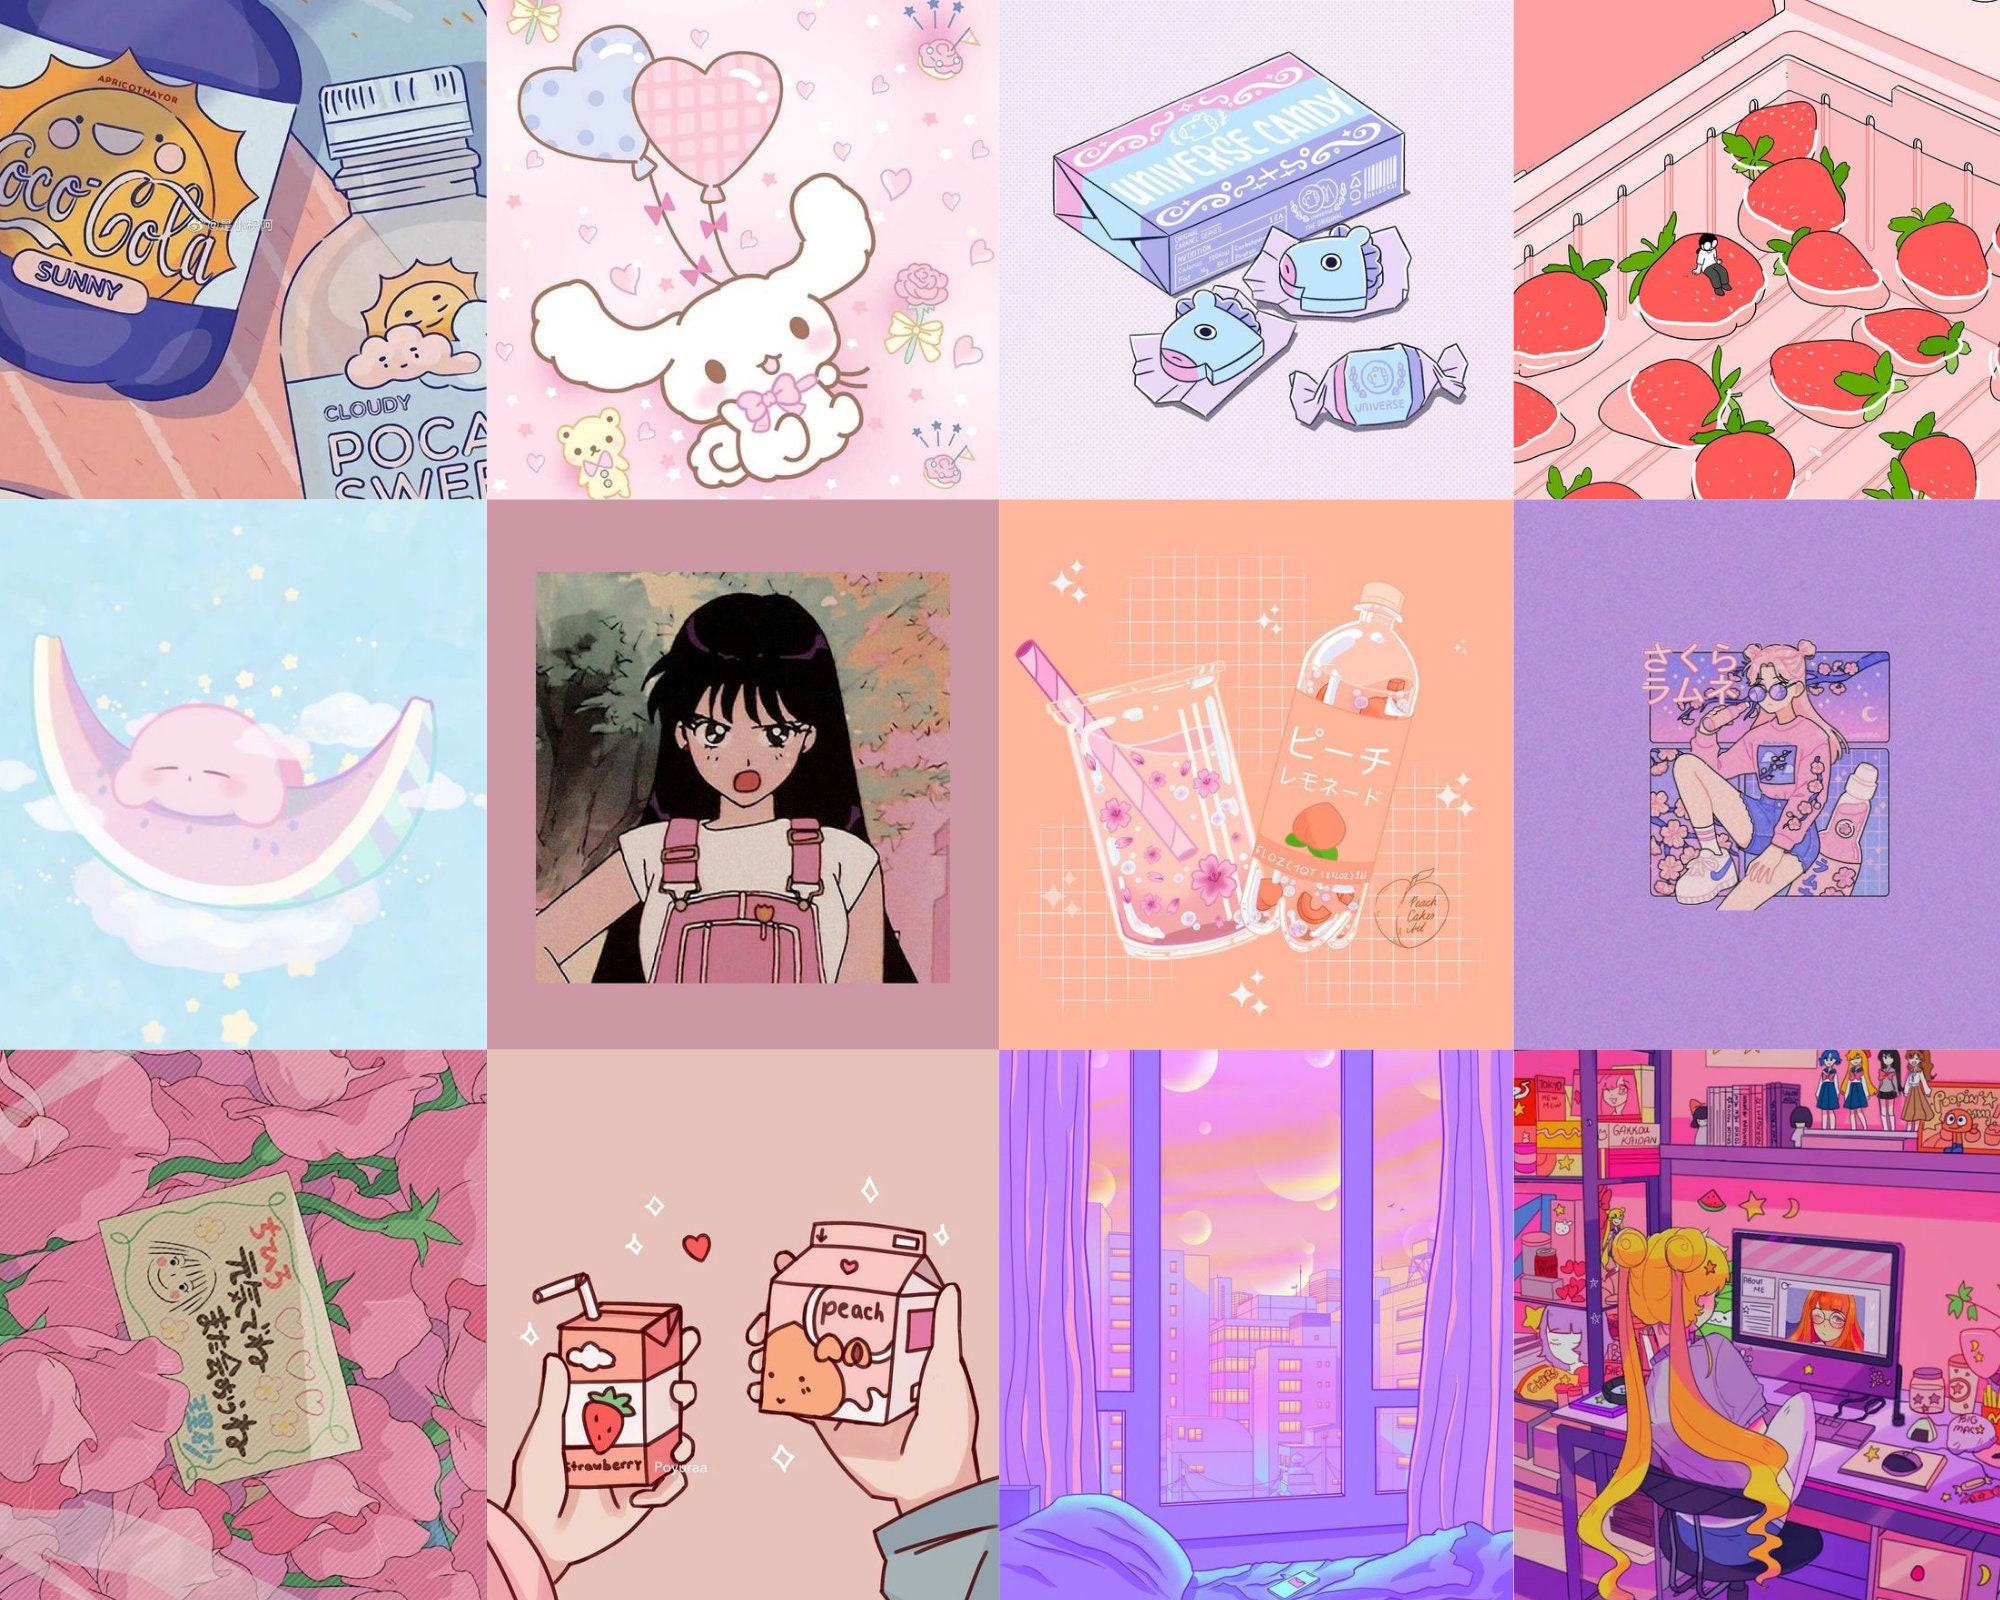 HD pastel anime wallpapers  Peakpx